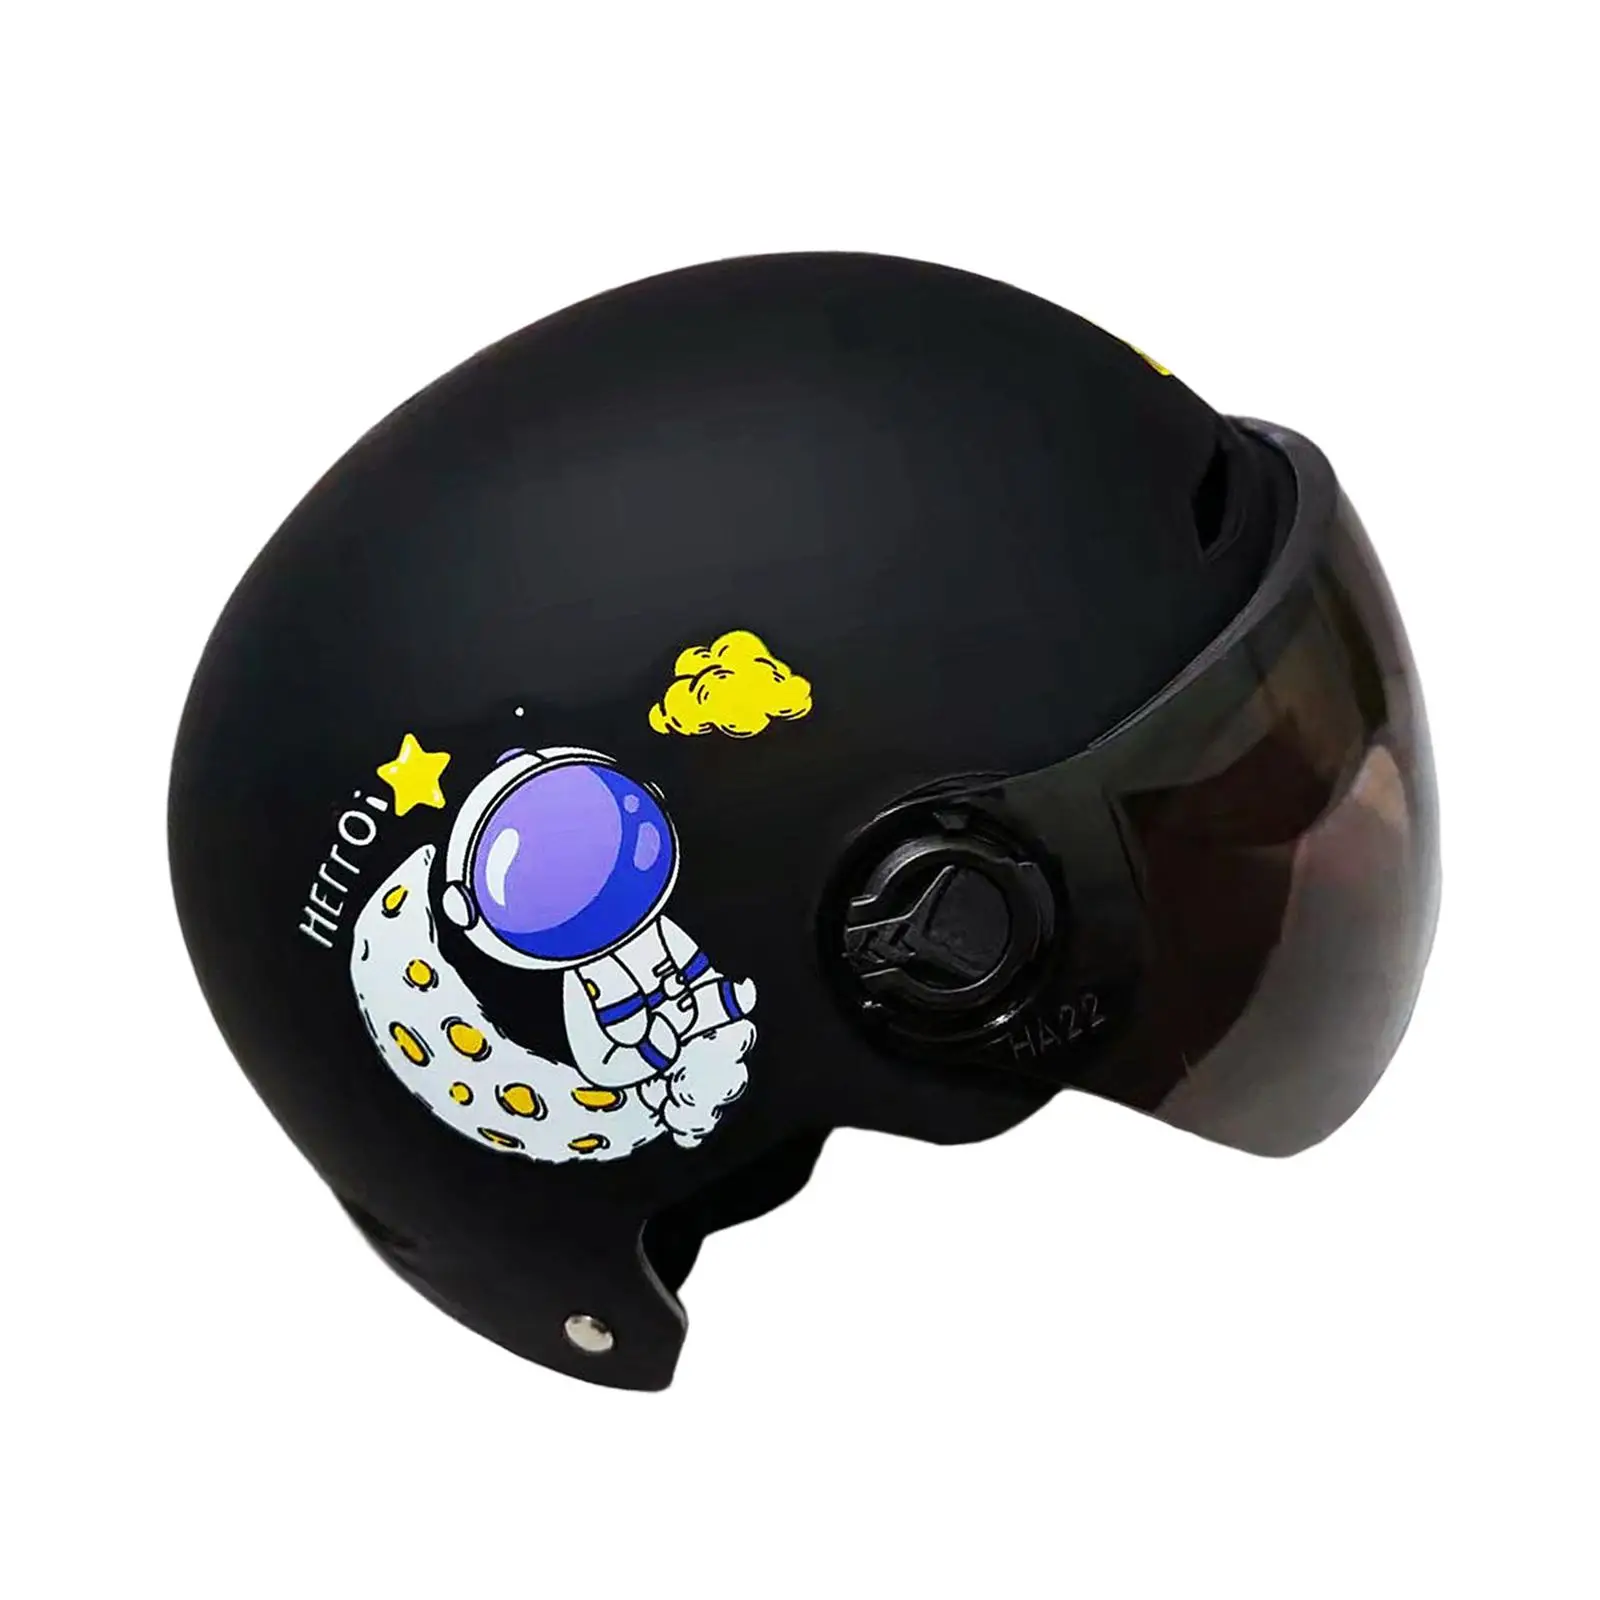 Breathable Bike Helmet Bicycle Headgear Adults Lightweight Adjustable Comfortable Sun Protection Head Protector for Biking